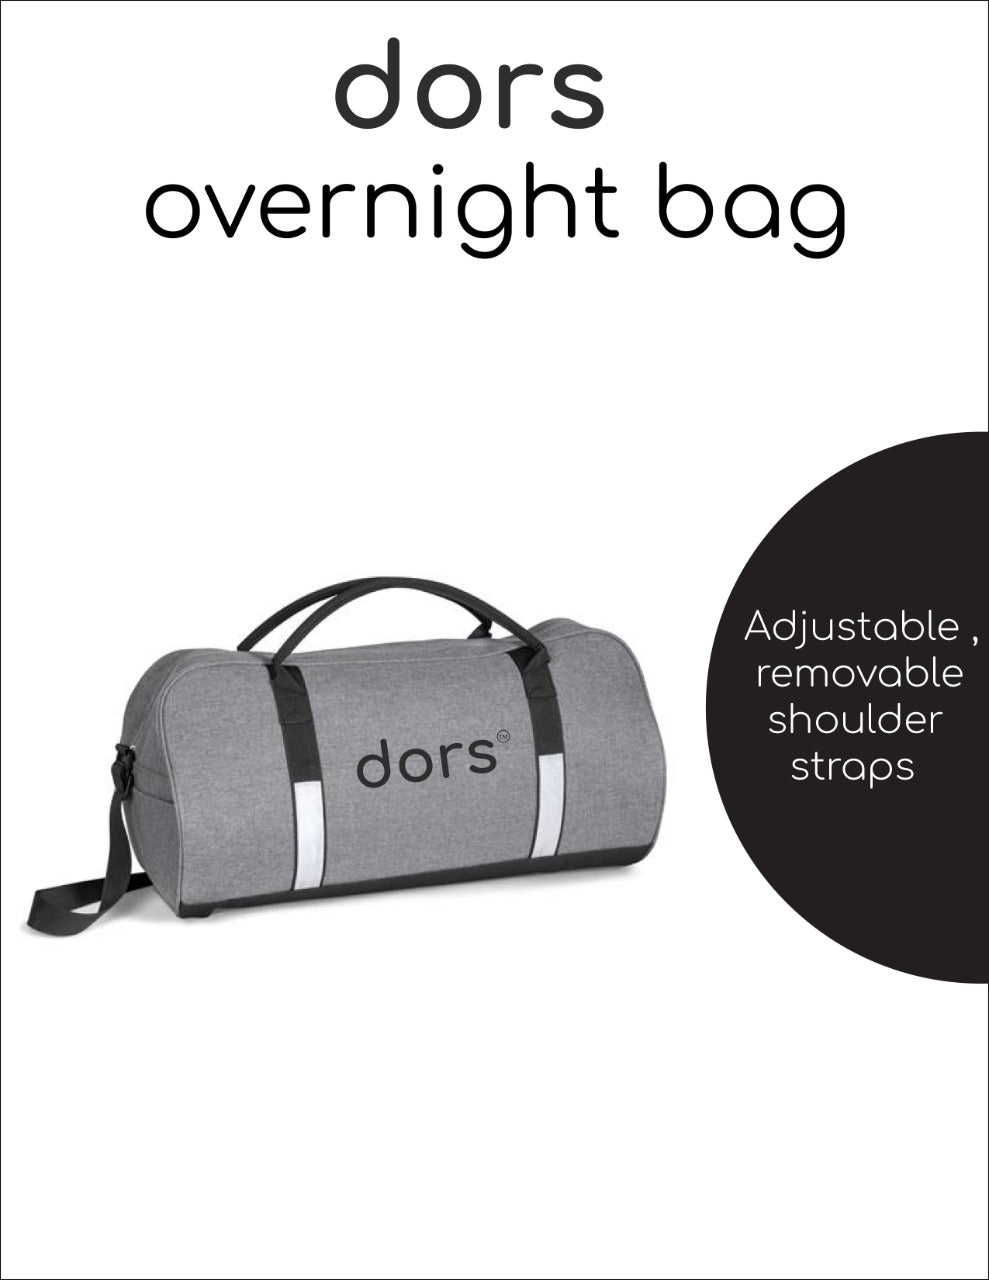 DORS Overnight bag